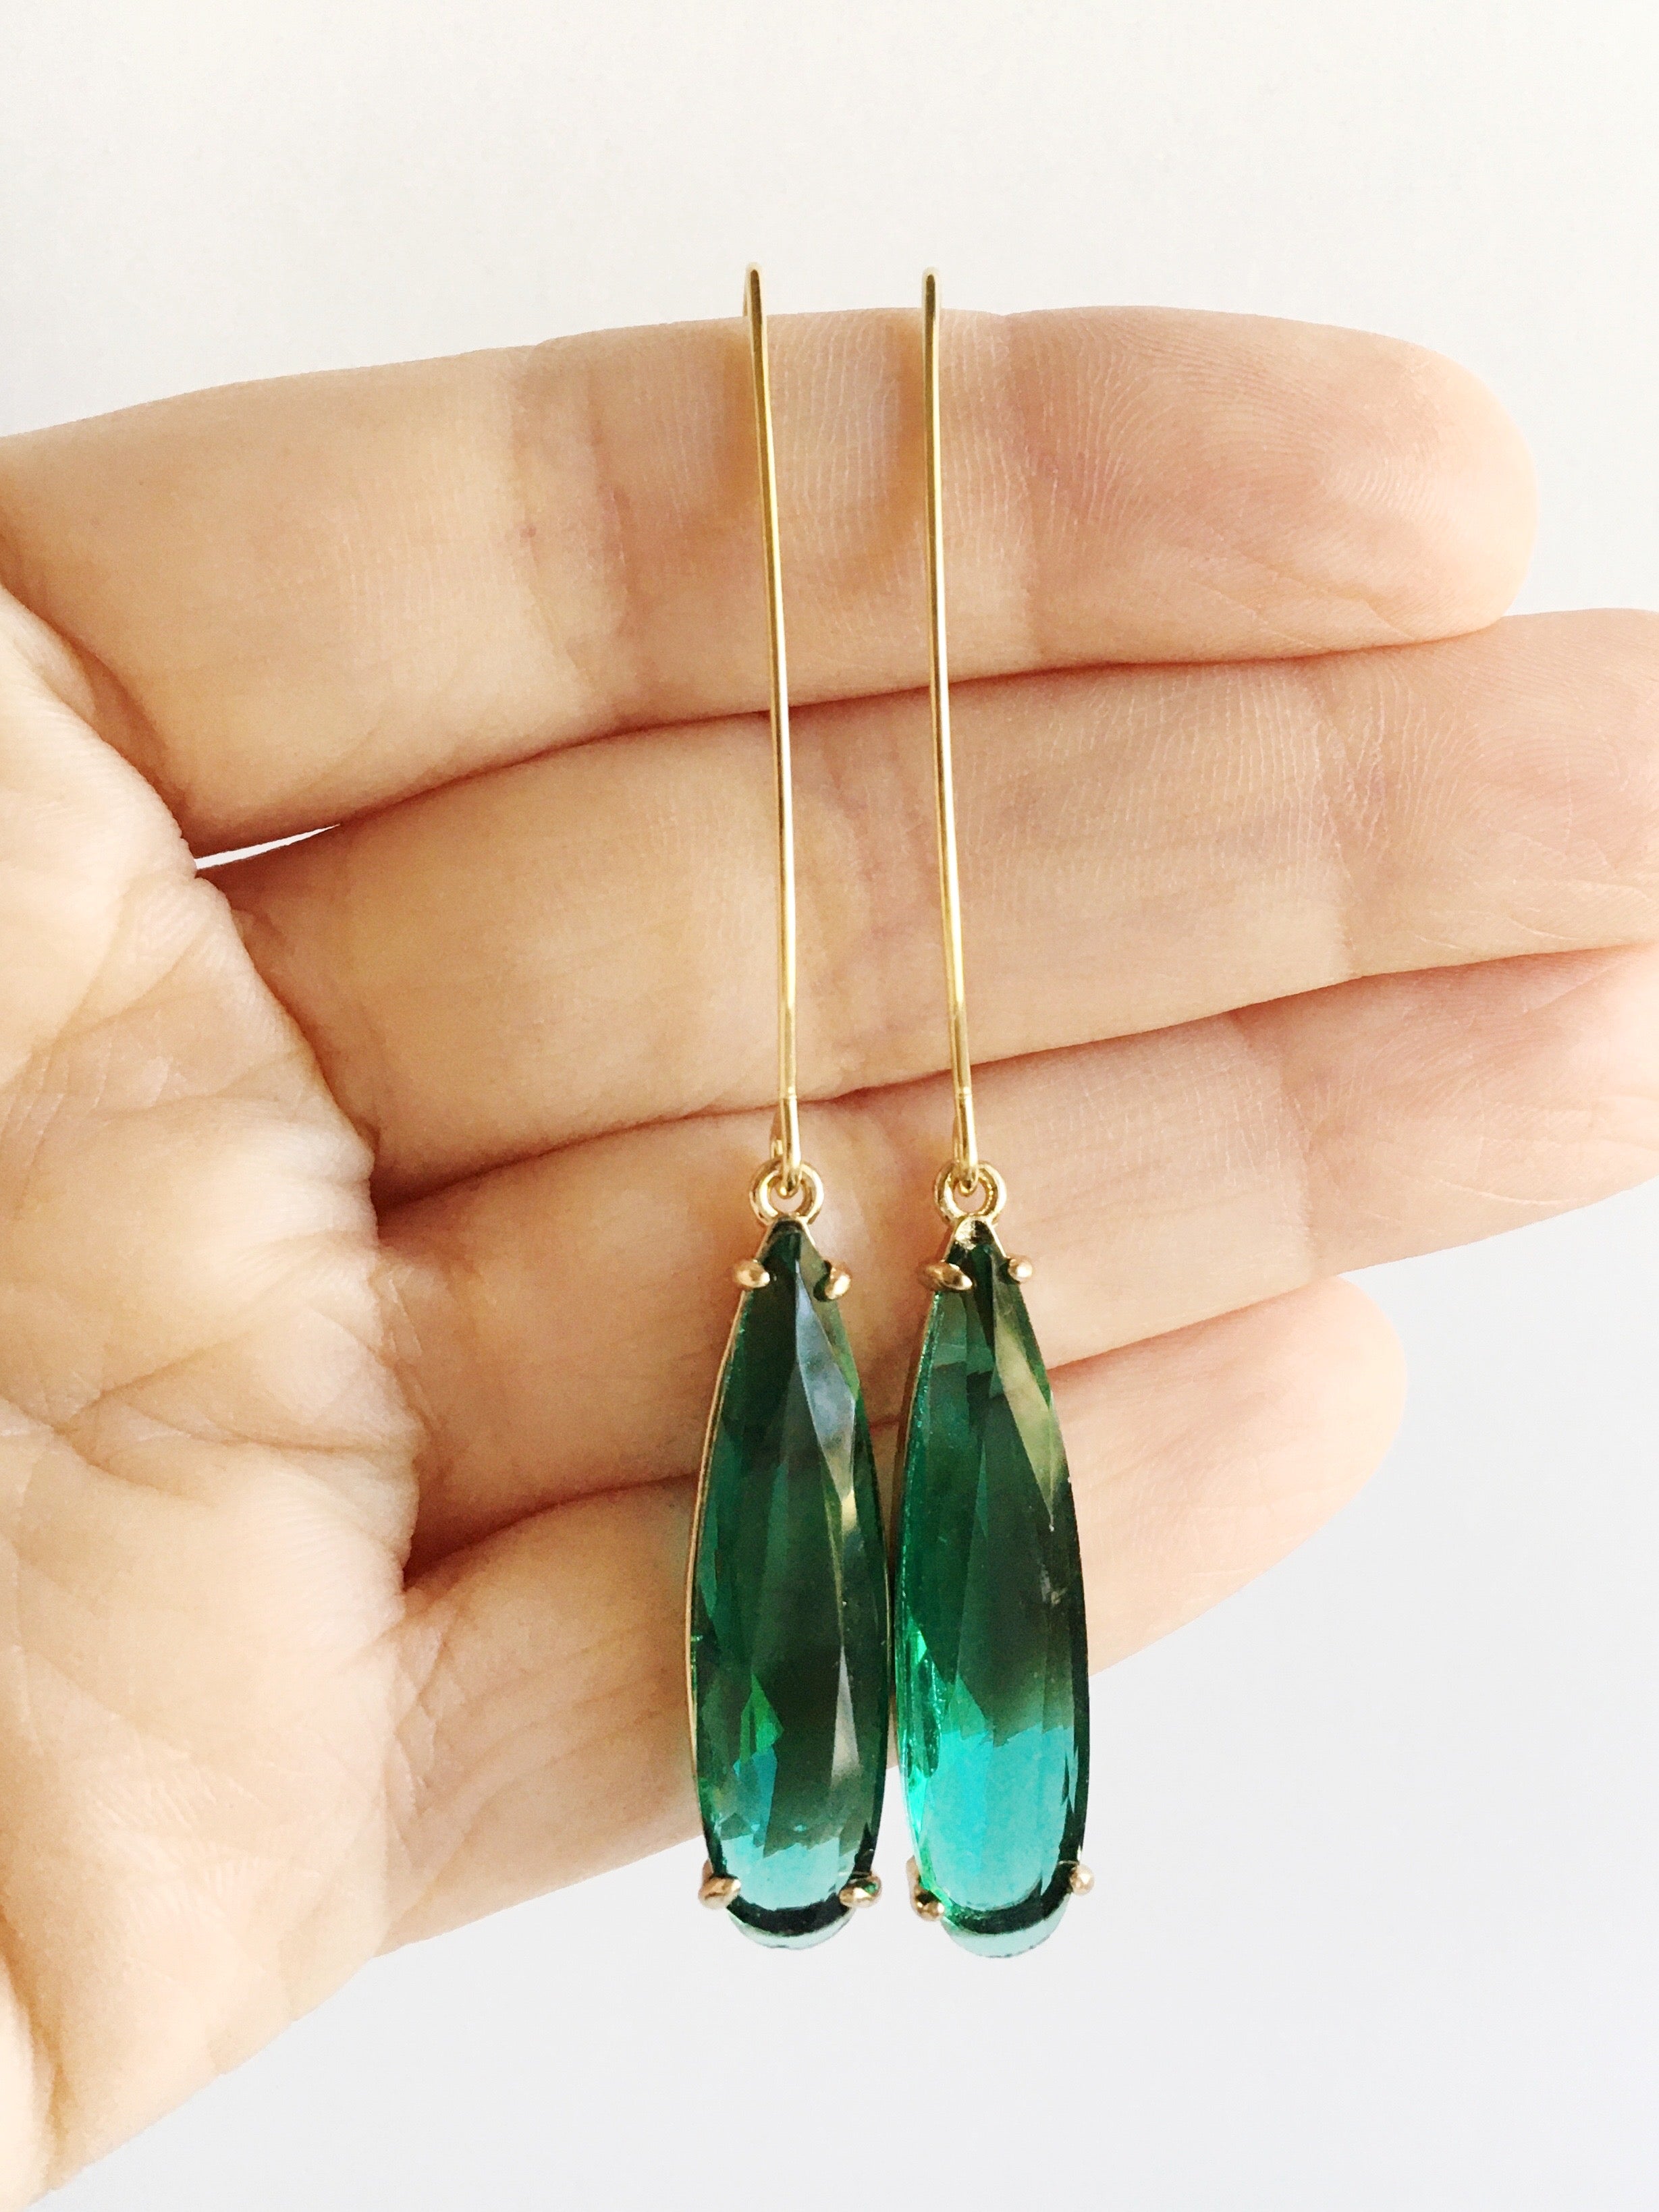 emerald green pendant earrings displayed on hand